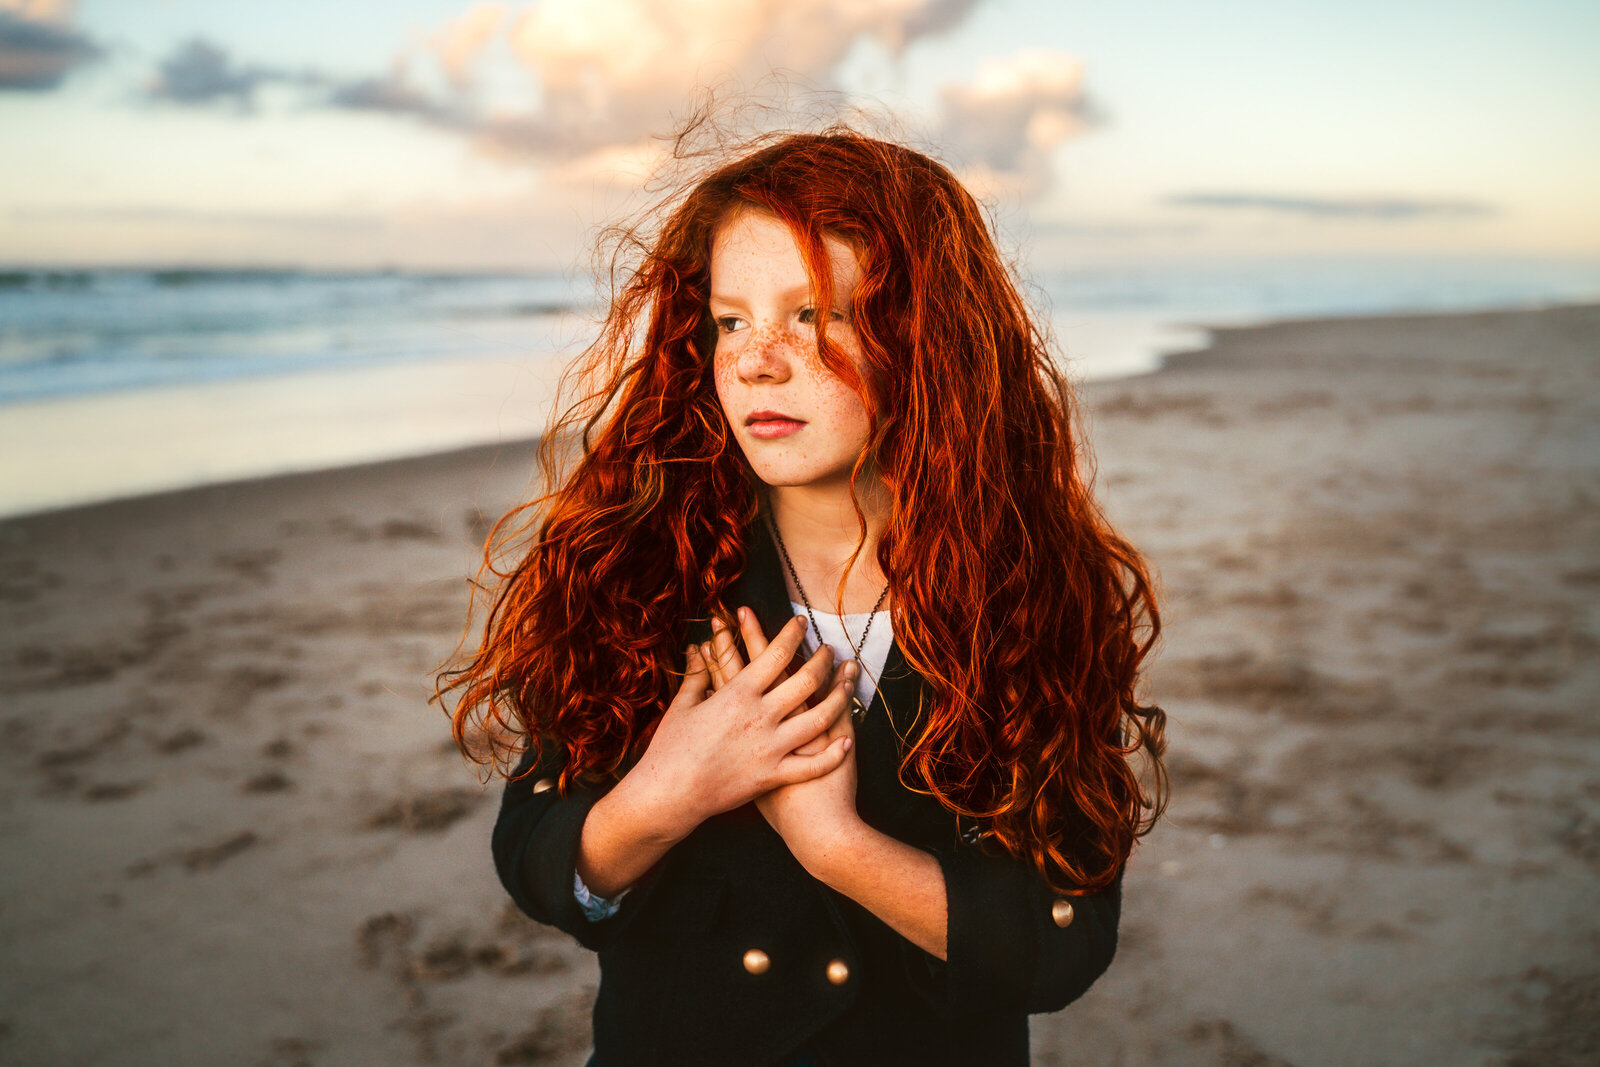 Mount-photographer-fineart-beach-child-redhead-13-2